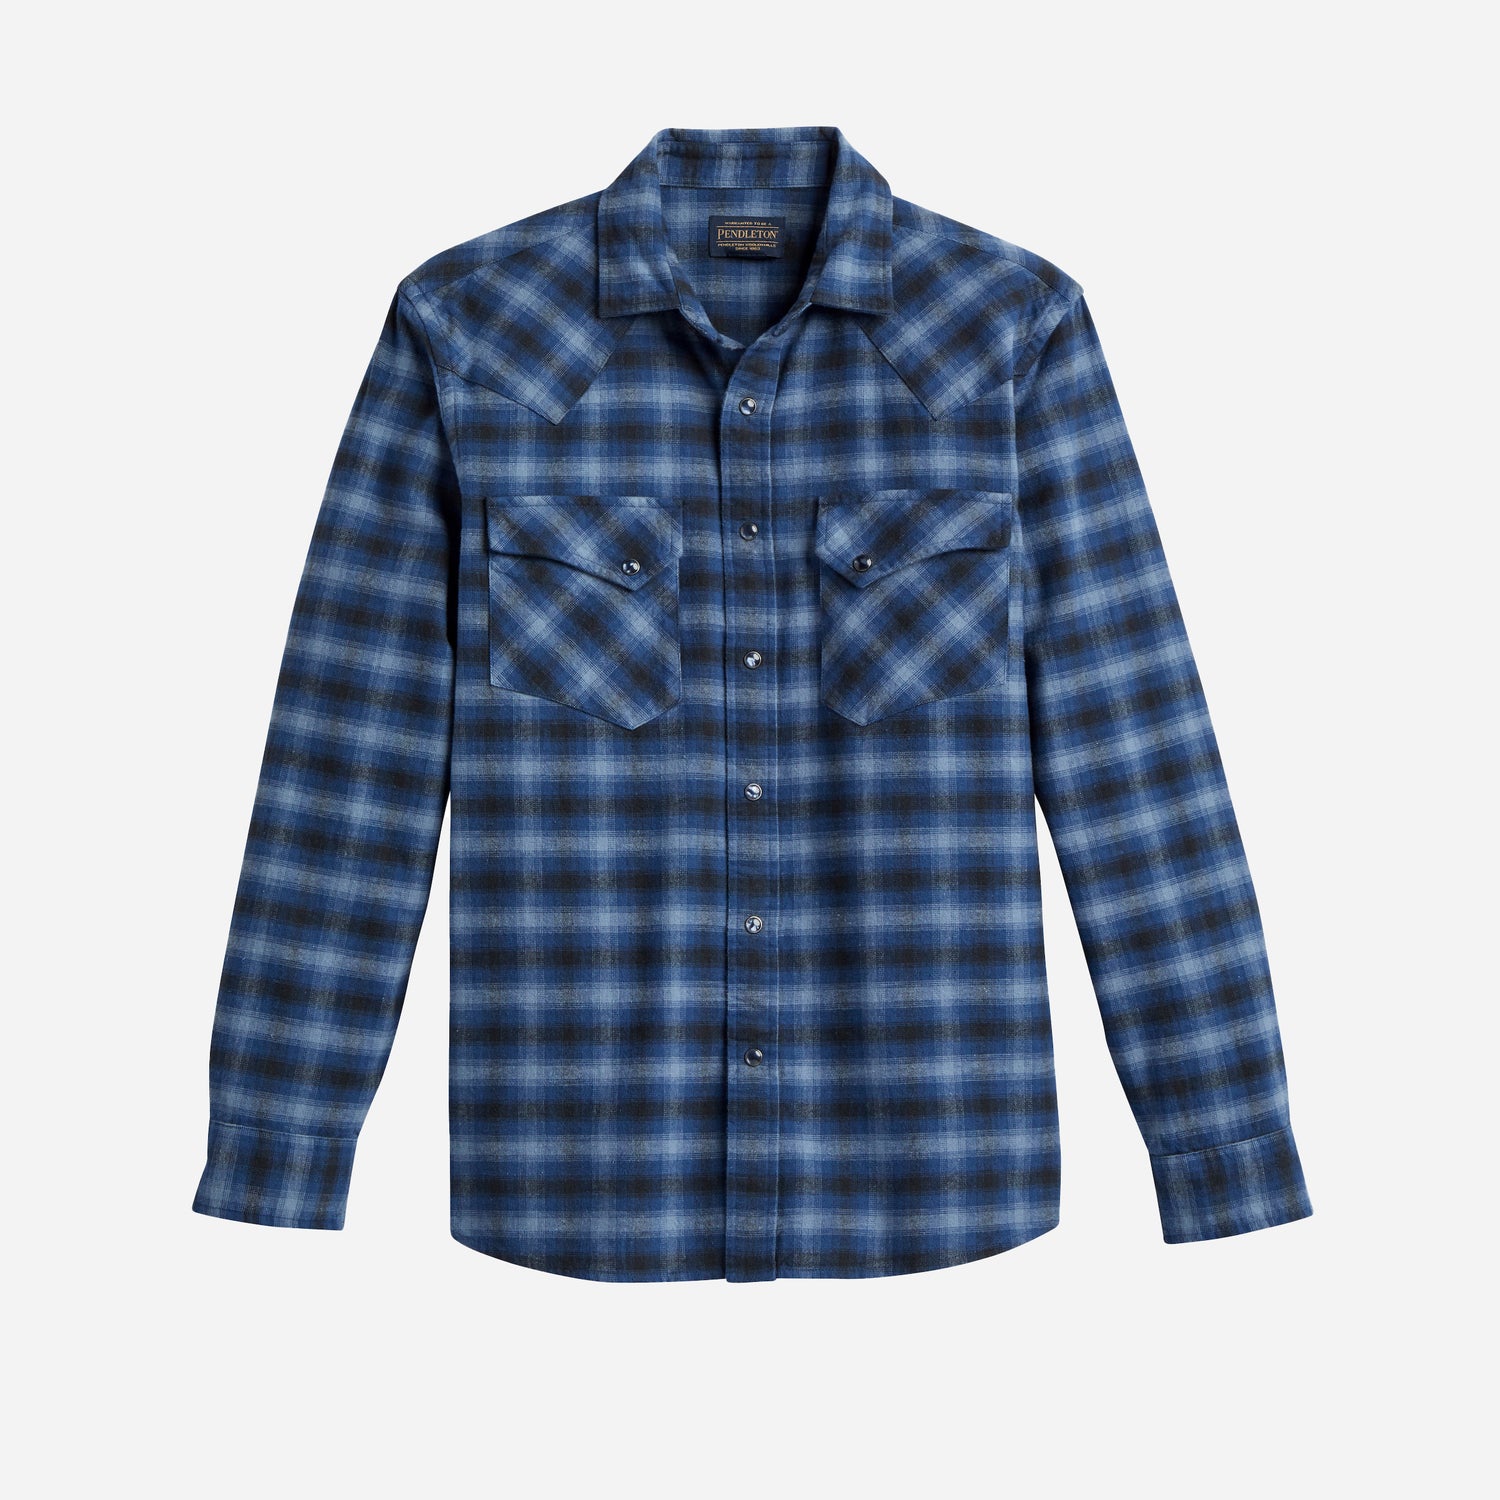 Wyatt Shirt - Charcoal / Denim Blue Plaid